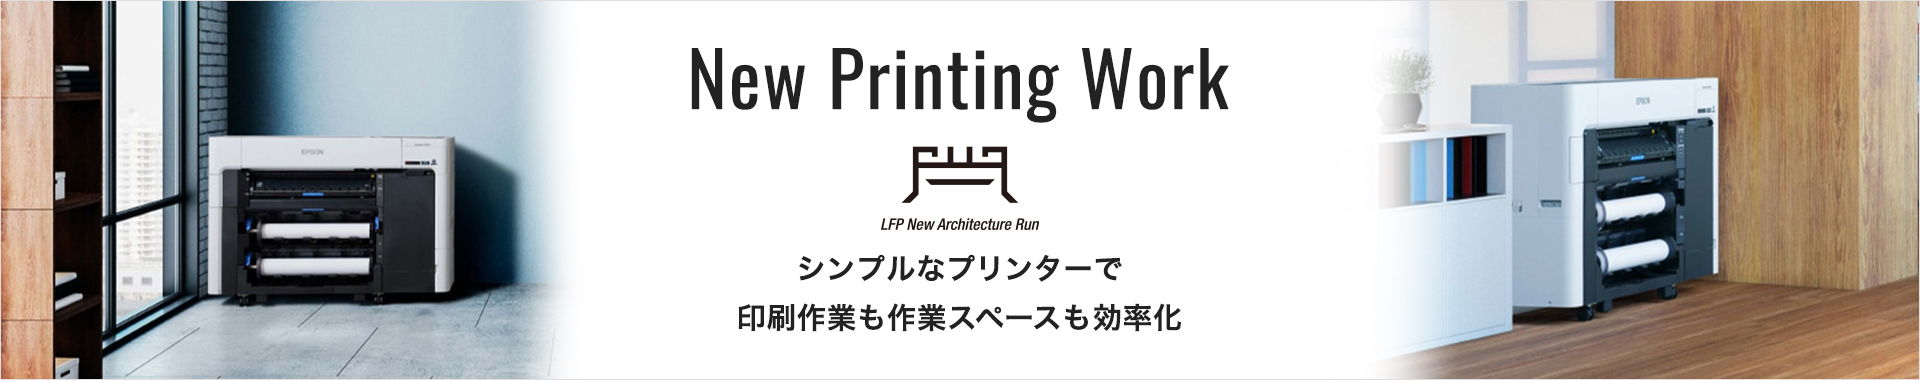 New Printing Work シンプルなプリンターで印刷作業も作業スペースも効率化